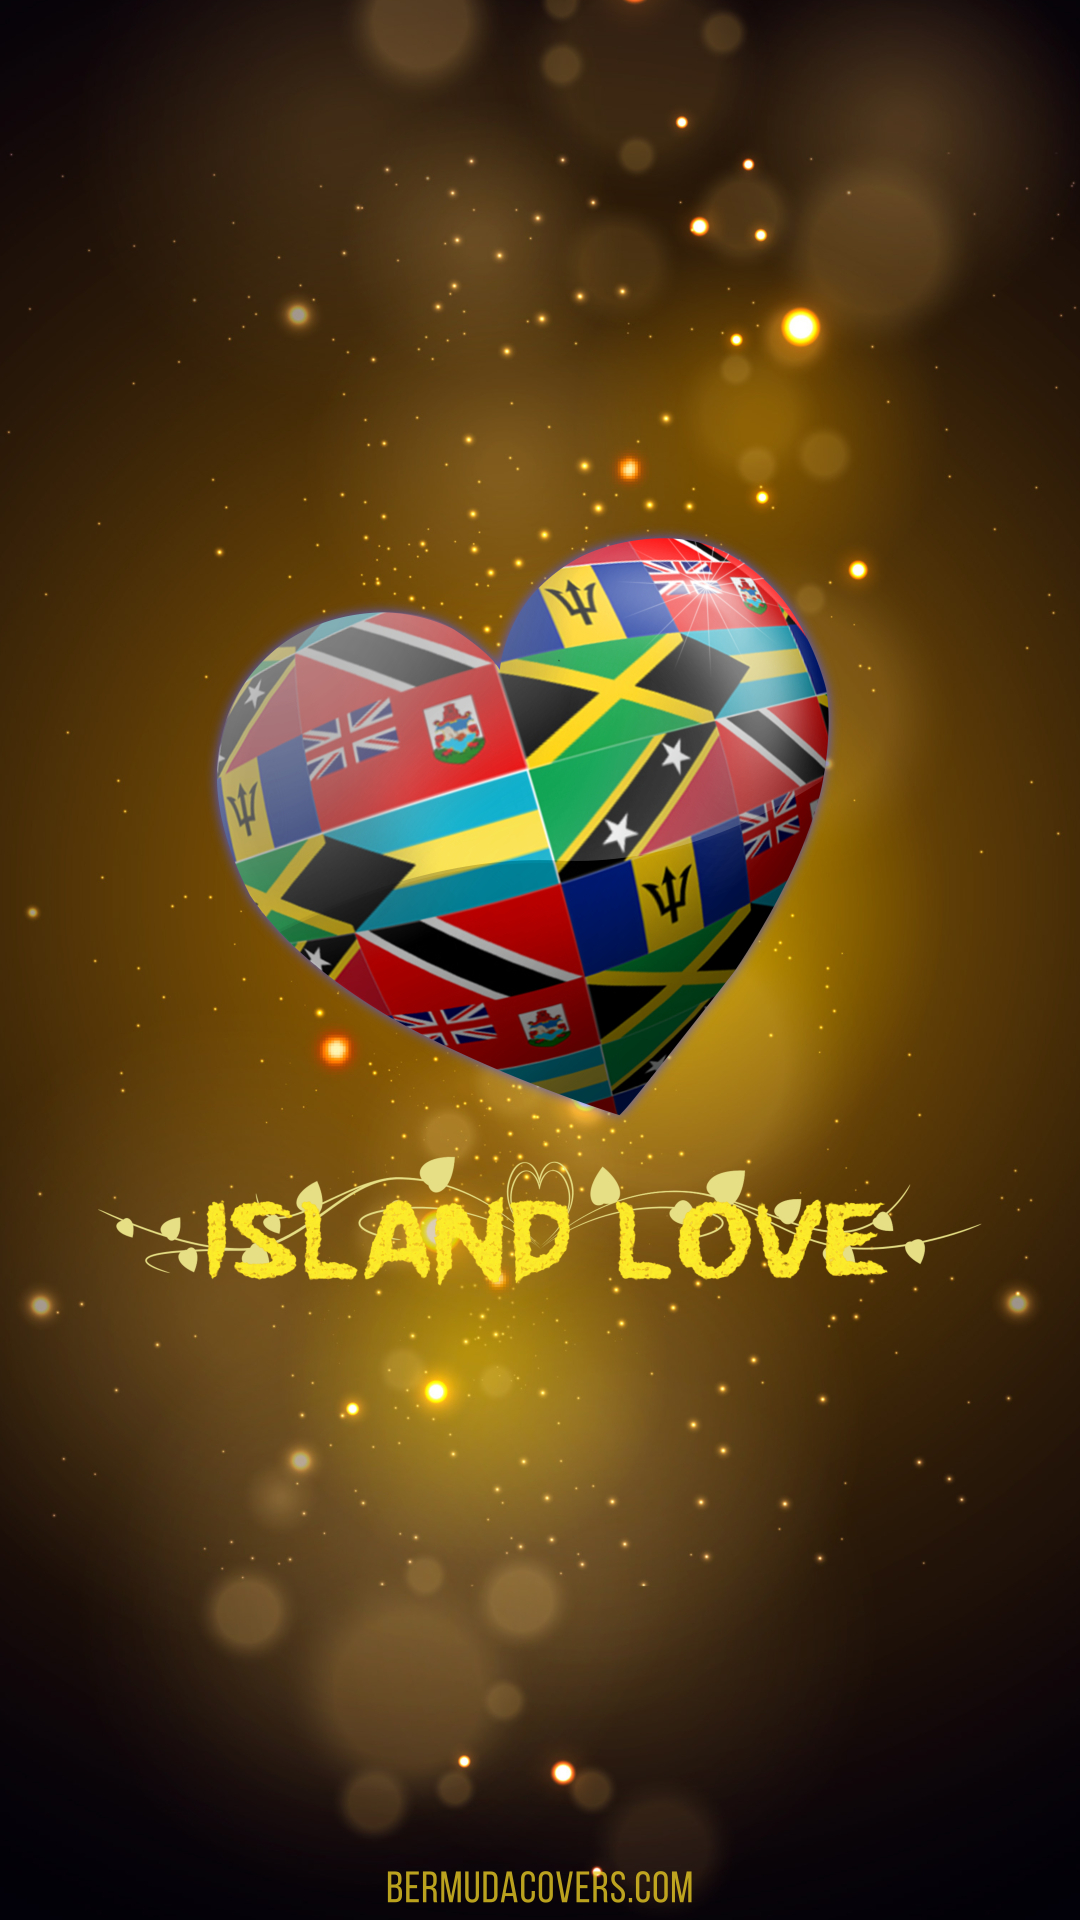 Gold Island Love Caribbean & Bermuda Flags heart island love Bernews Mobile phone wallpaper lock screen design image photo NnKtgxMZ